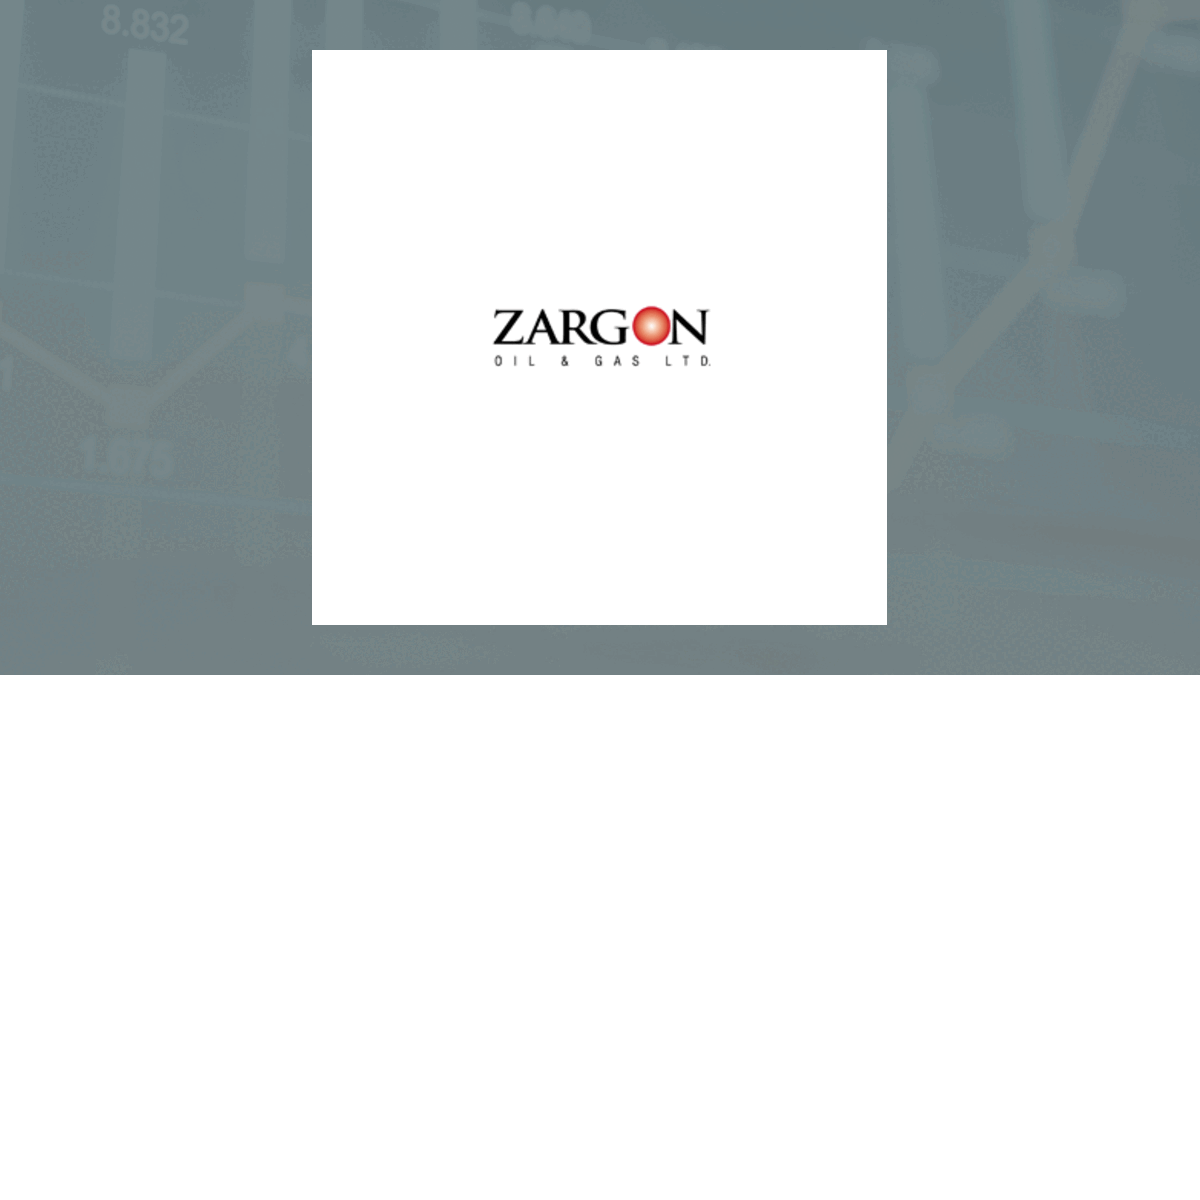 Zargon Oil & Gas logo